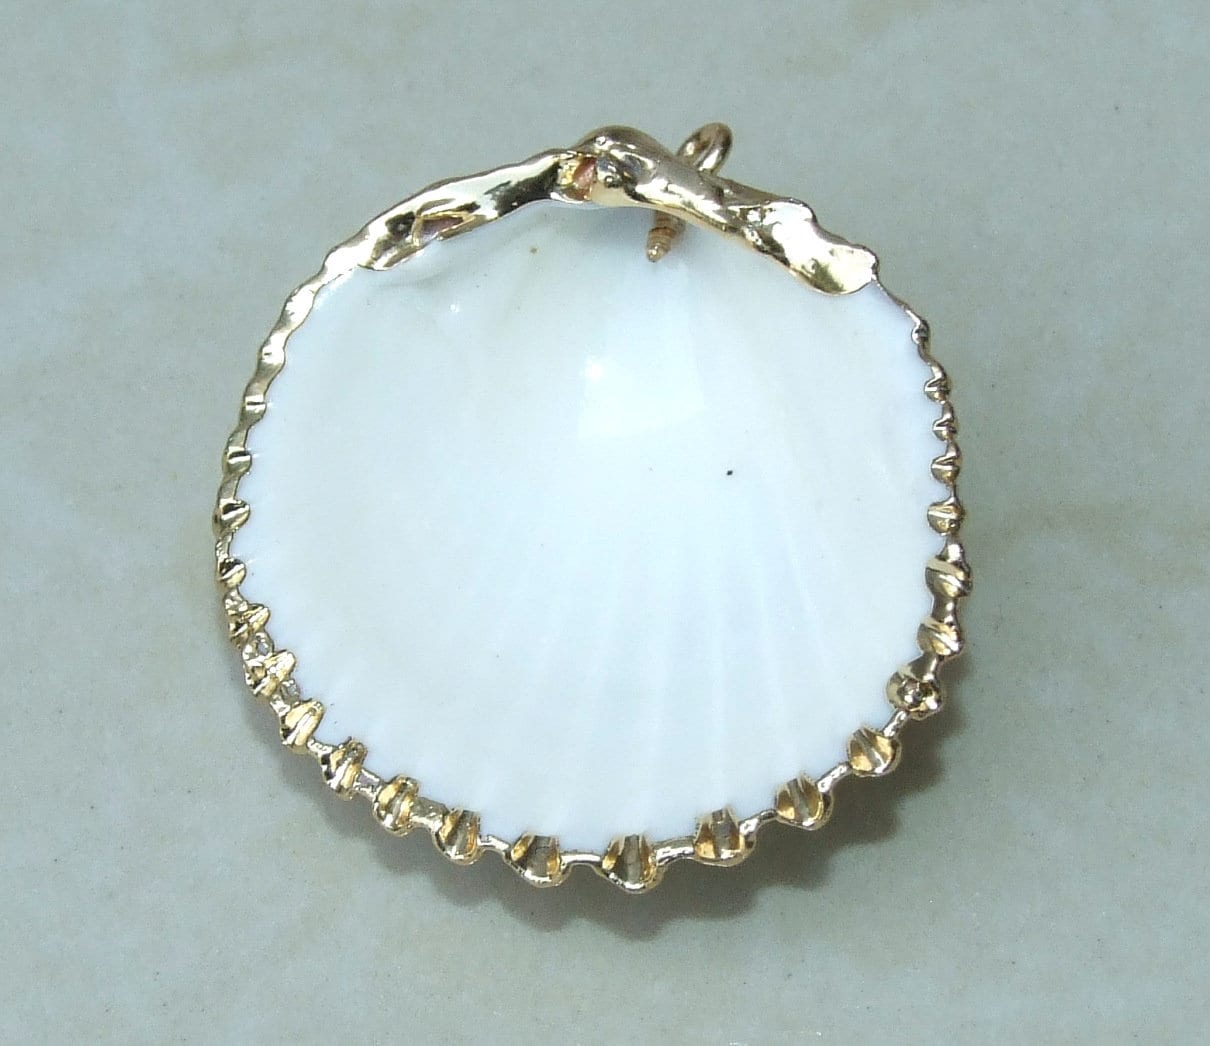 Natural Sea Shell Pendant, Seashell Bead, Shell Pendant, Charm, Clam Shell, Shell Jewelry, Beach Jewelry, White and Gold - 35-40mm - 61-05